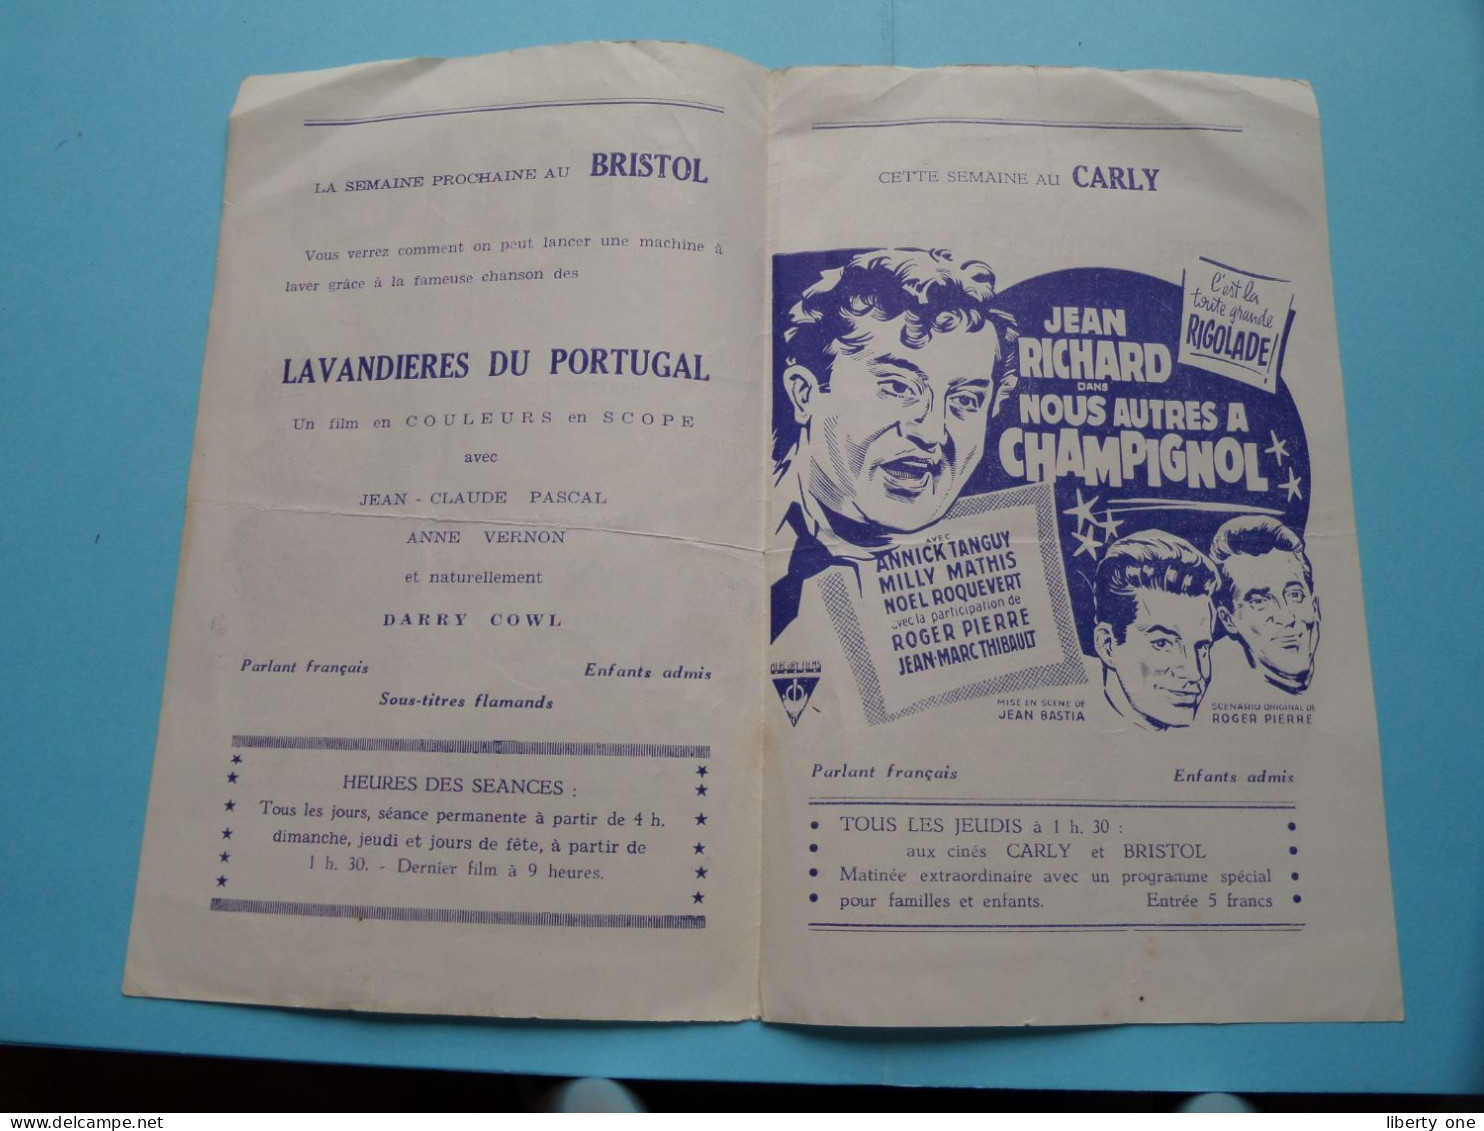 BRISTOL Chaussée De WATERLOO - 1958 ( Zie / Voir SCANS ) Programme ! - Cinema Advertisement